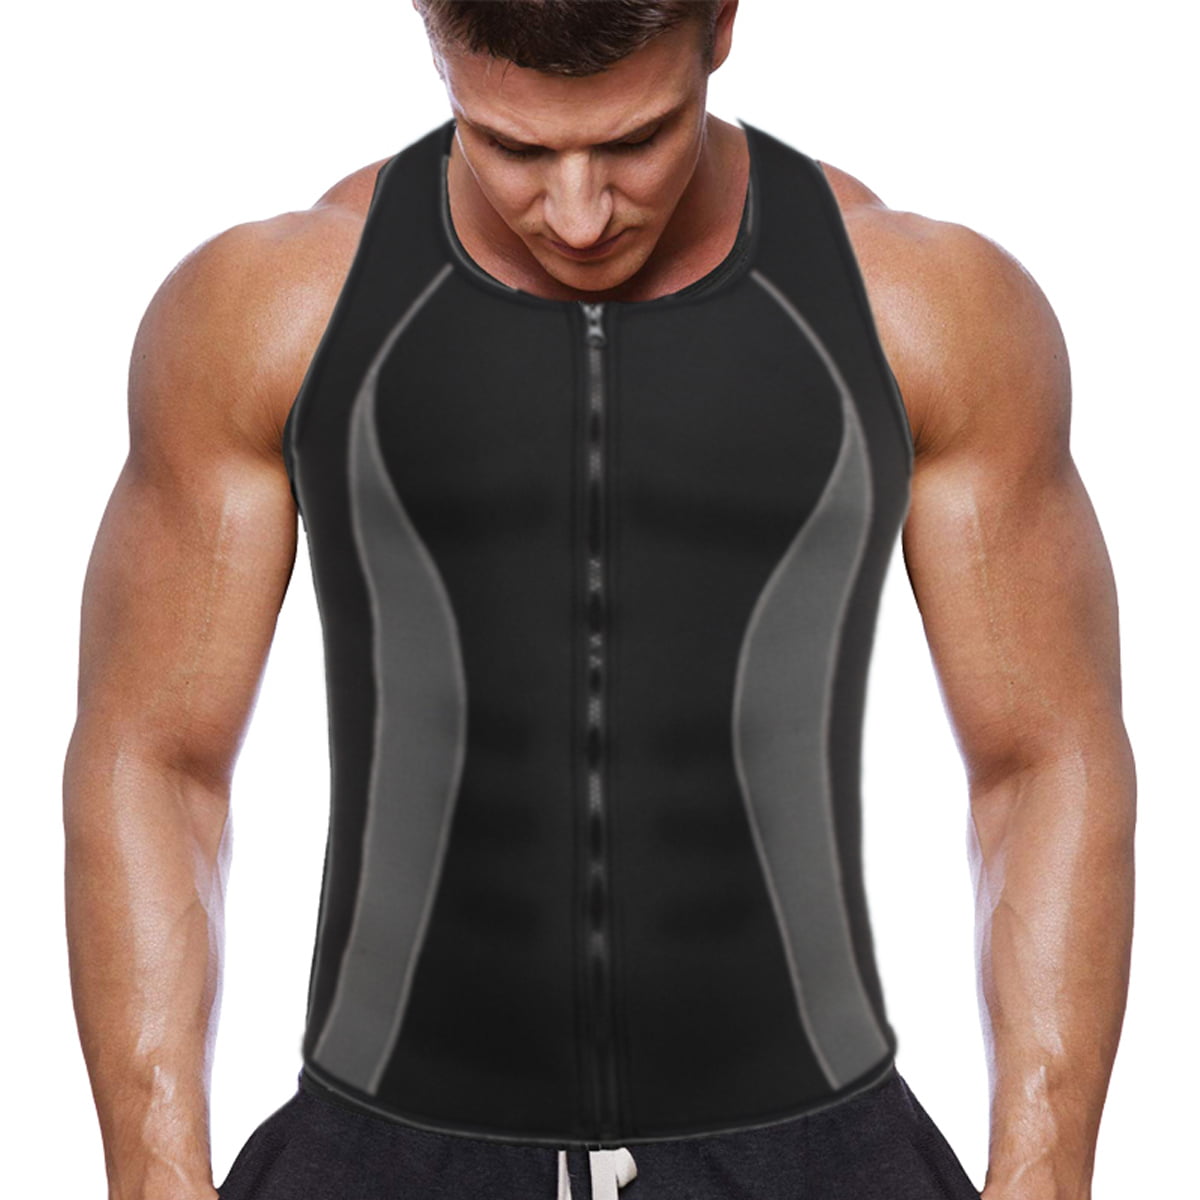 Details about   Men's Neoprene Sauna Waist Trainer Vest Tank Top Thermal Sweat Body Shaper Shirt 